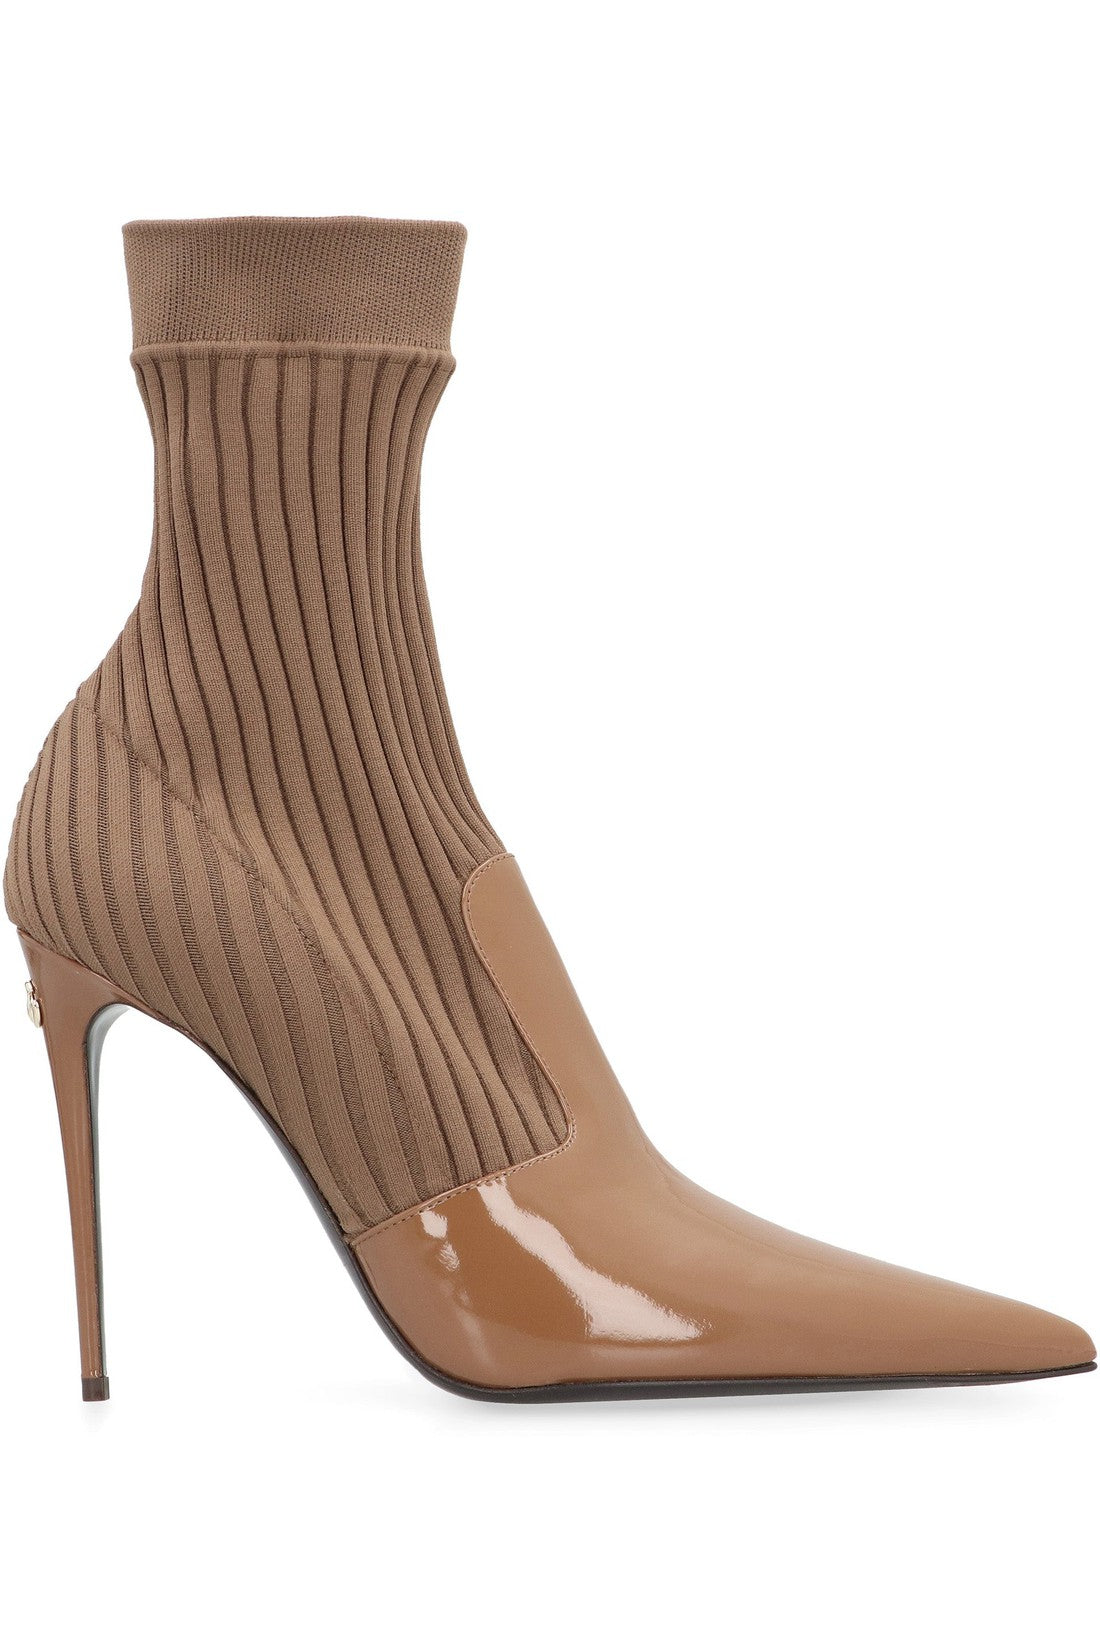 Dolce & Gabbana-OUTLET-SALE-Lollo sock ankle boots-ARCHIVIST